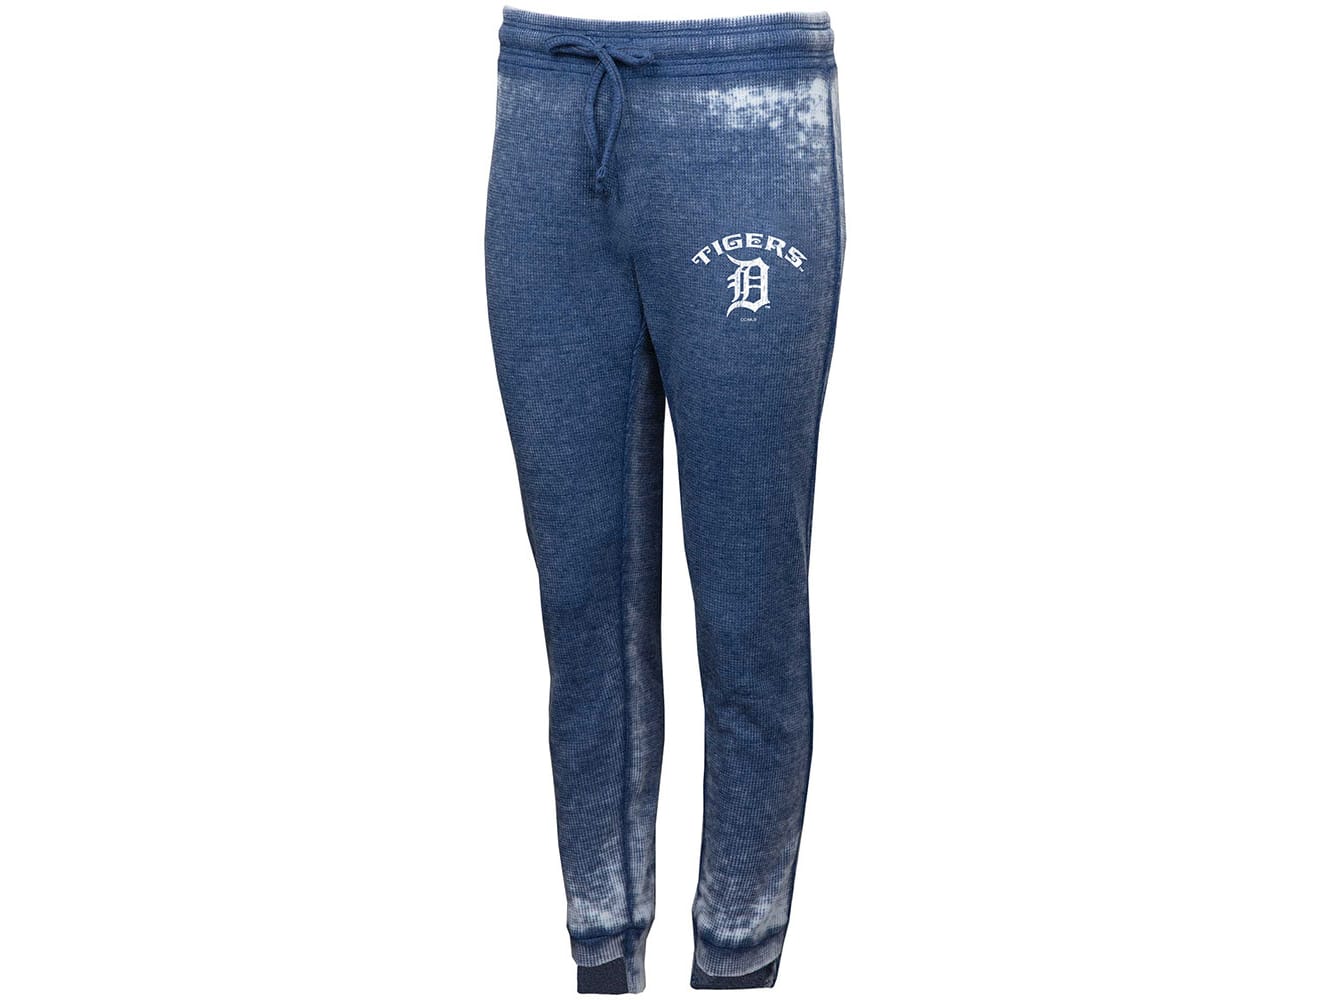 Detroit Tigers Women's Knit Leggings - Navy Blue